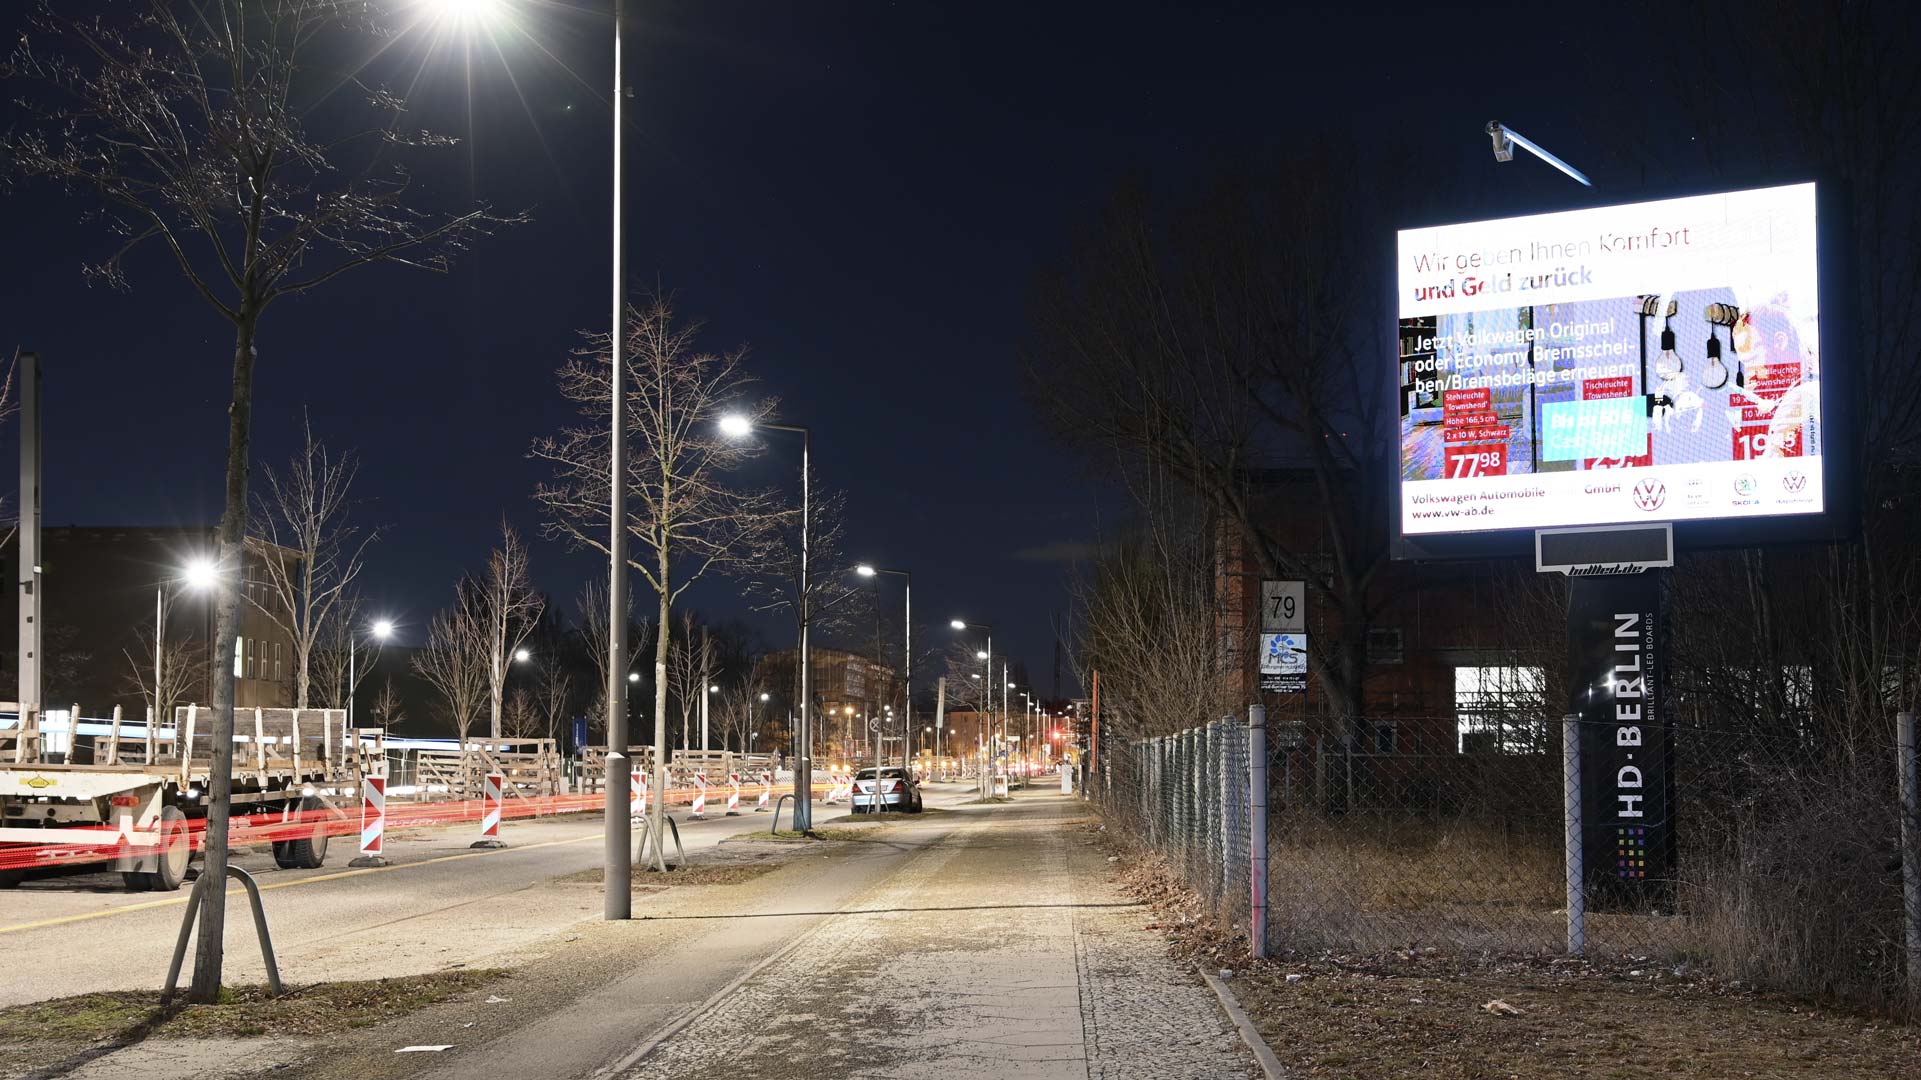 Digitale Werbung mit HD Berlin LED Werbefläche mieten in der Charlottenburger Chaussee 47 Berlin, LED Werbung Berlin